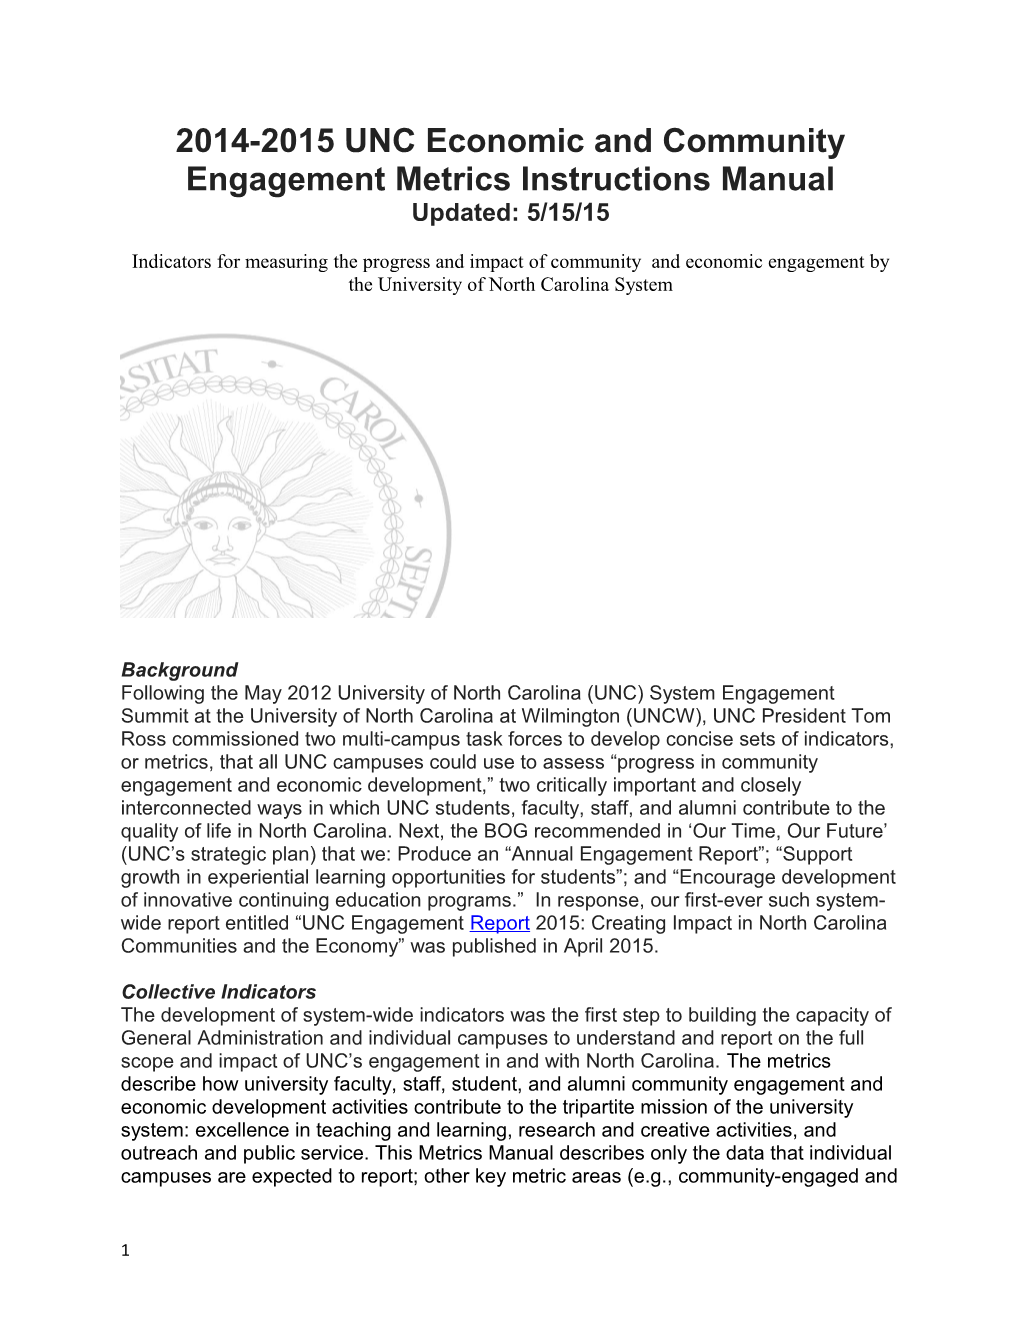 2014-2015 UNC Economic and Community Engagement Metricsinstructions Manual